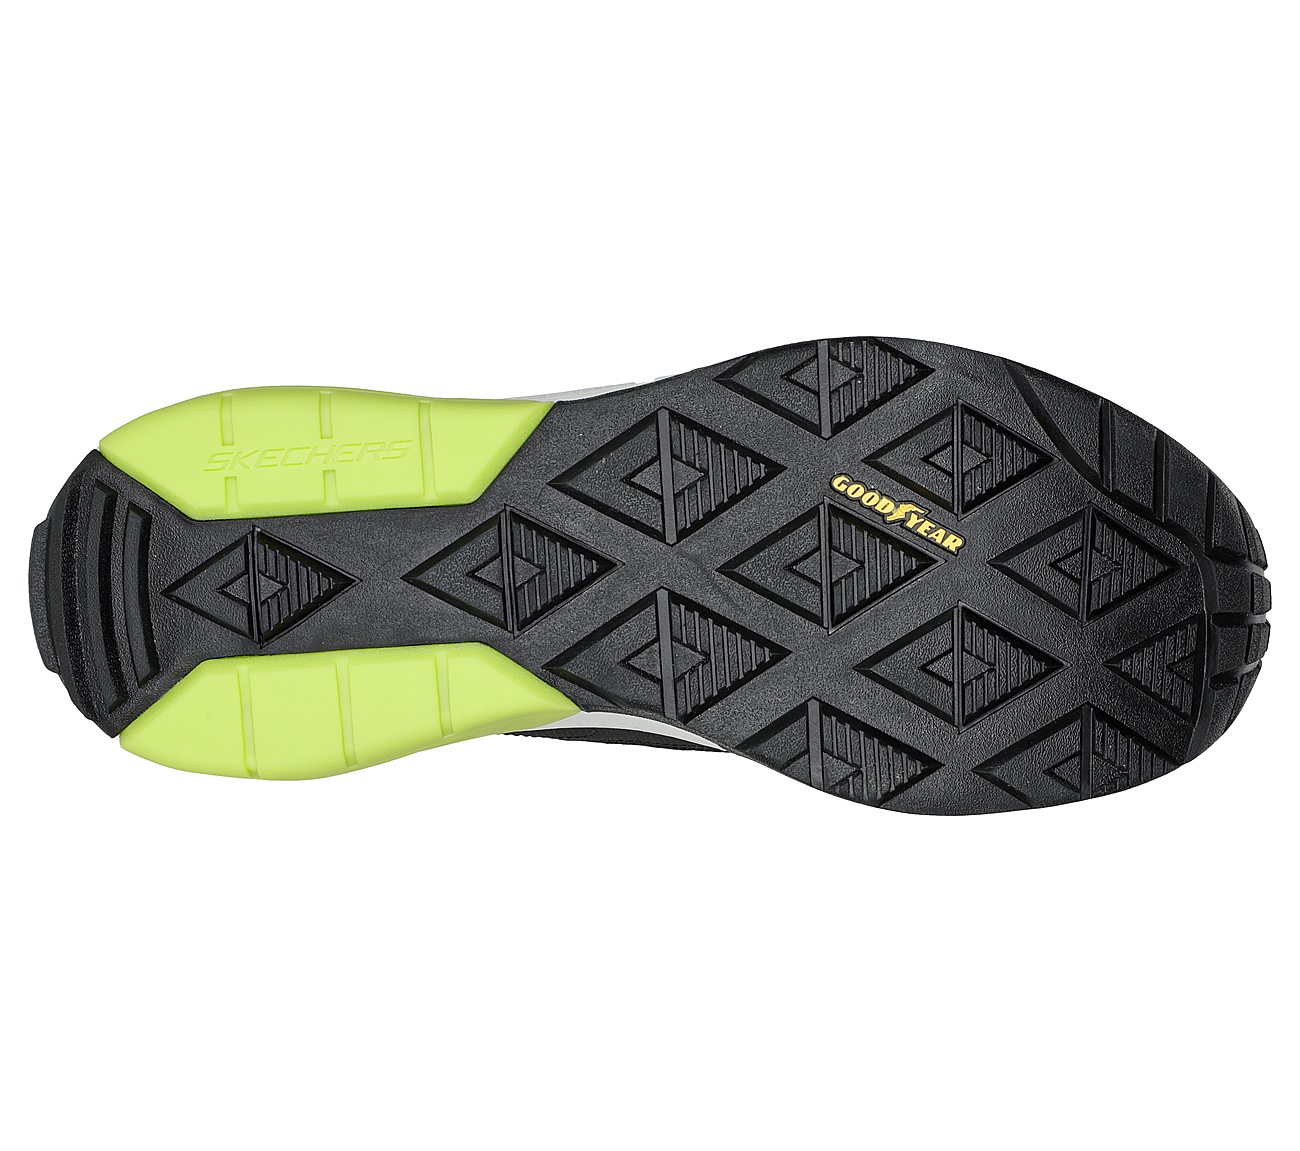 SKECH-AIR EXTREME V2, WHITE/BLACK/LIME Footwear Bottom View